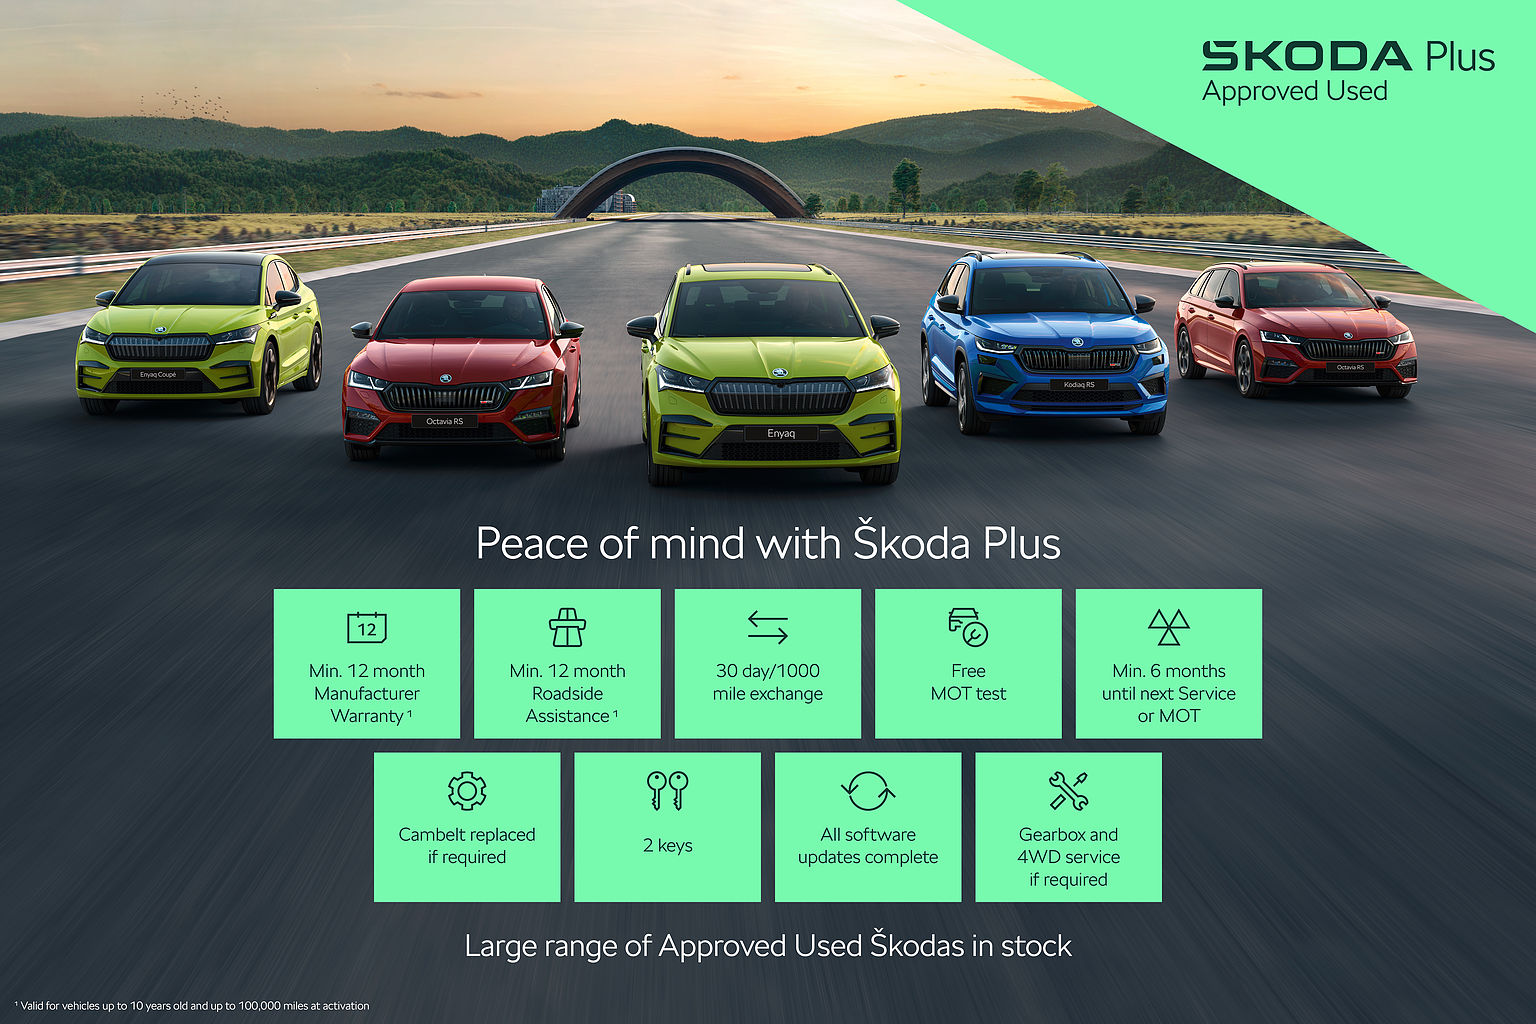 SKODA Superb 2.0 TDI (150ps) SportLine Plus Auto/DSG Hatchback